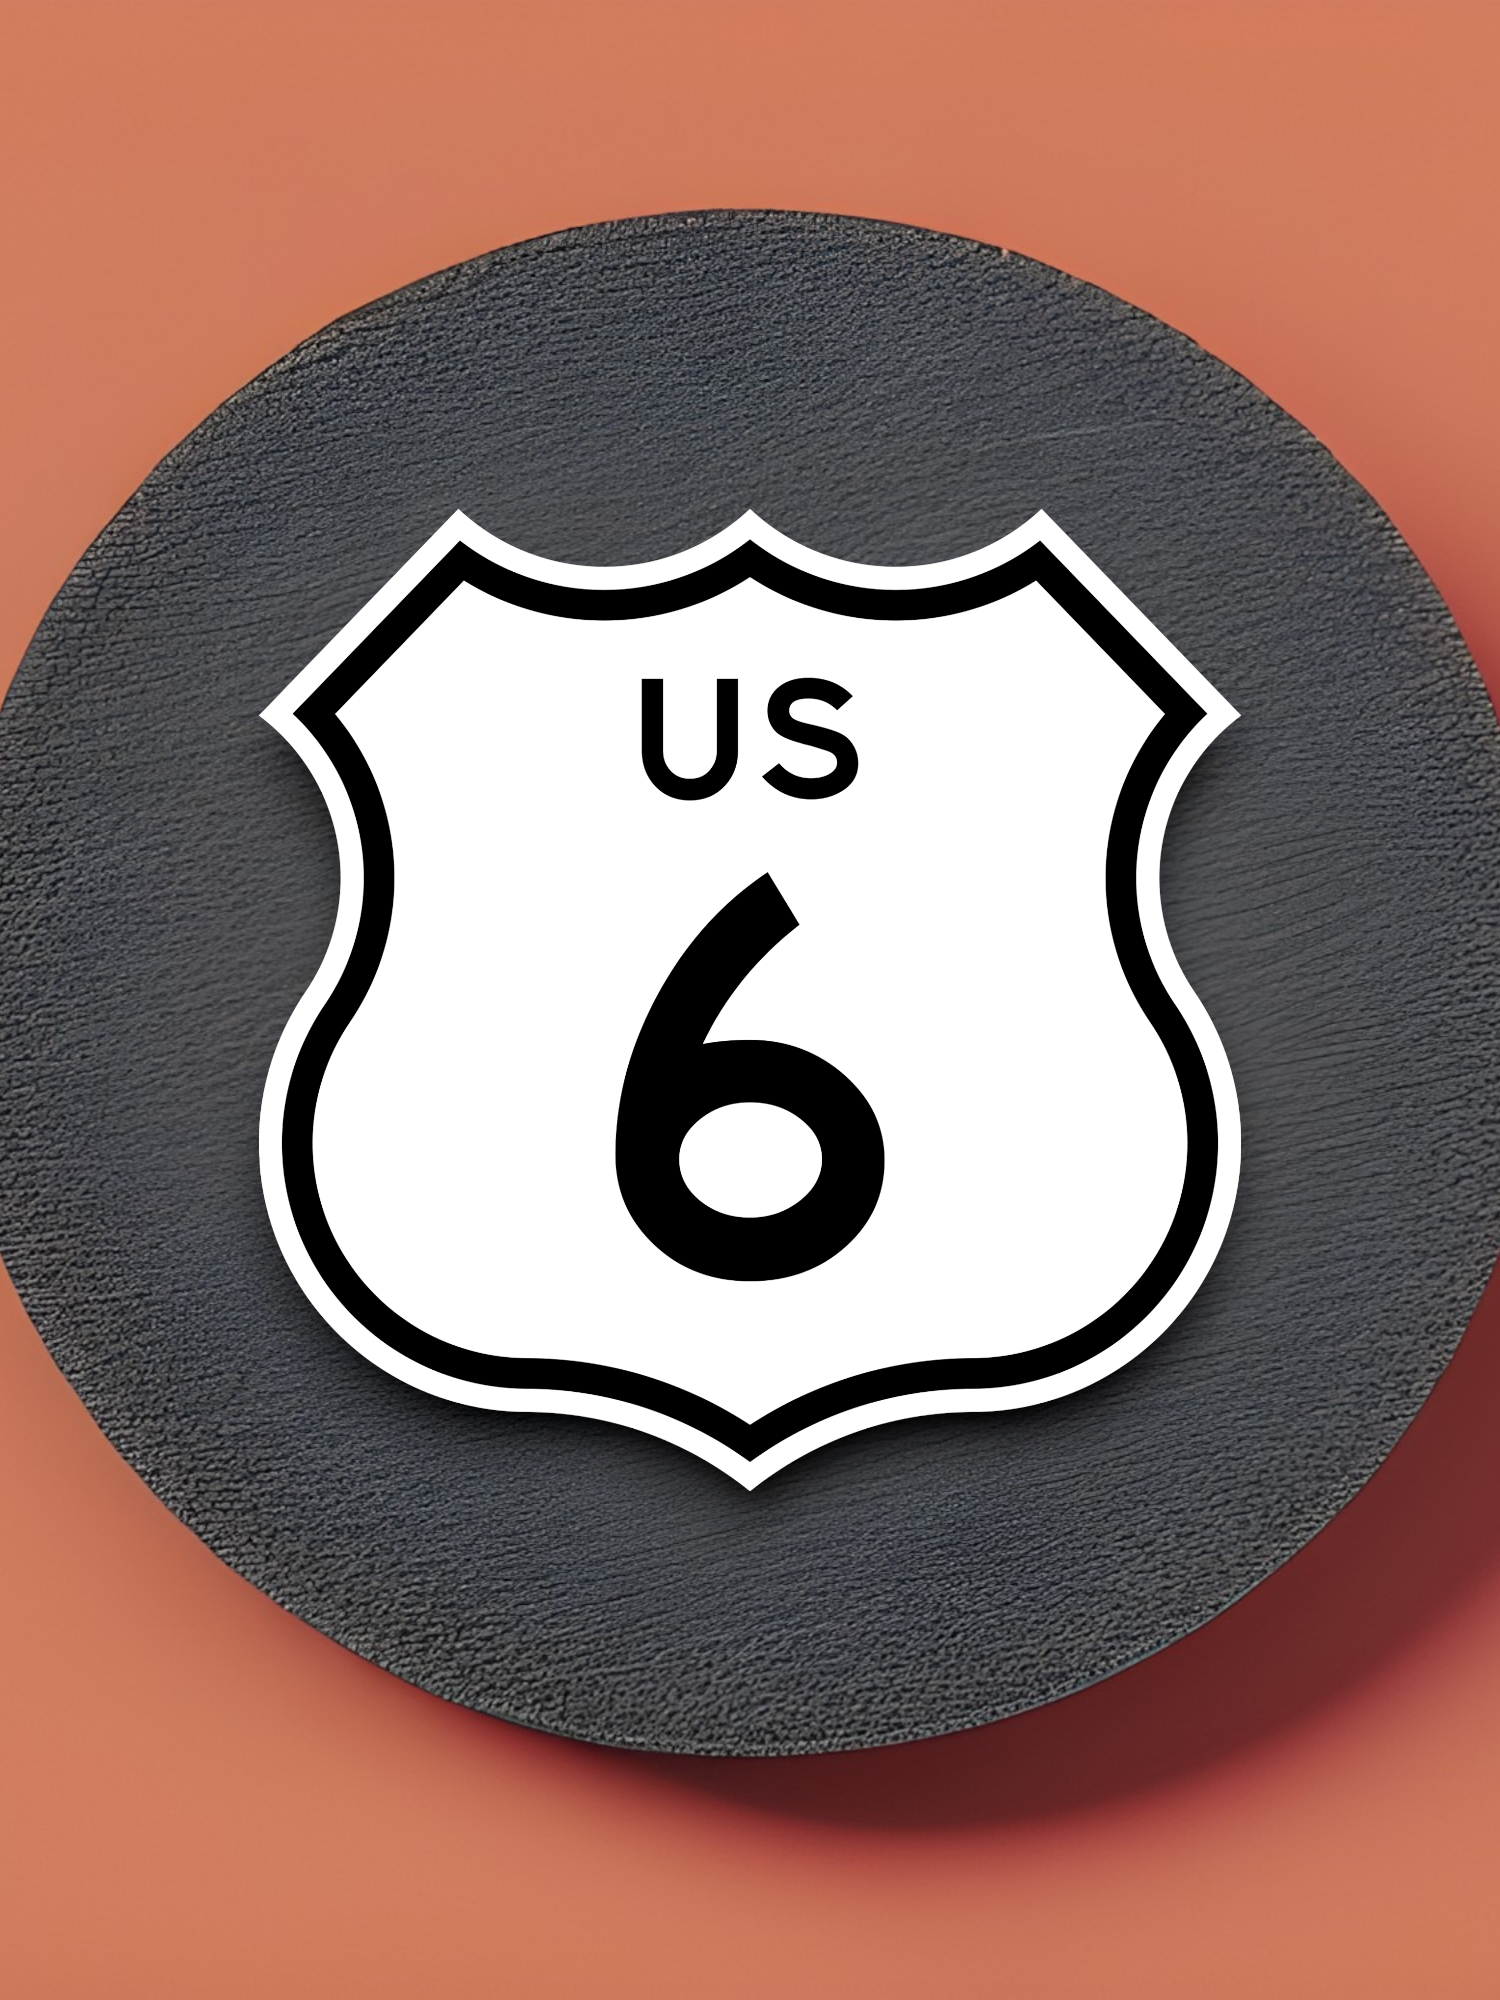 U.S. Route 6 - Alt Road Sign Sticker